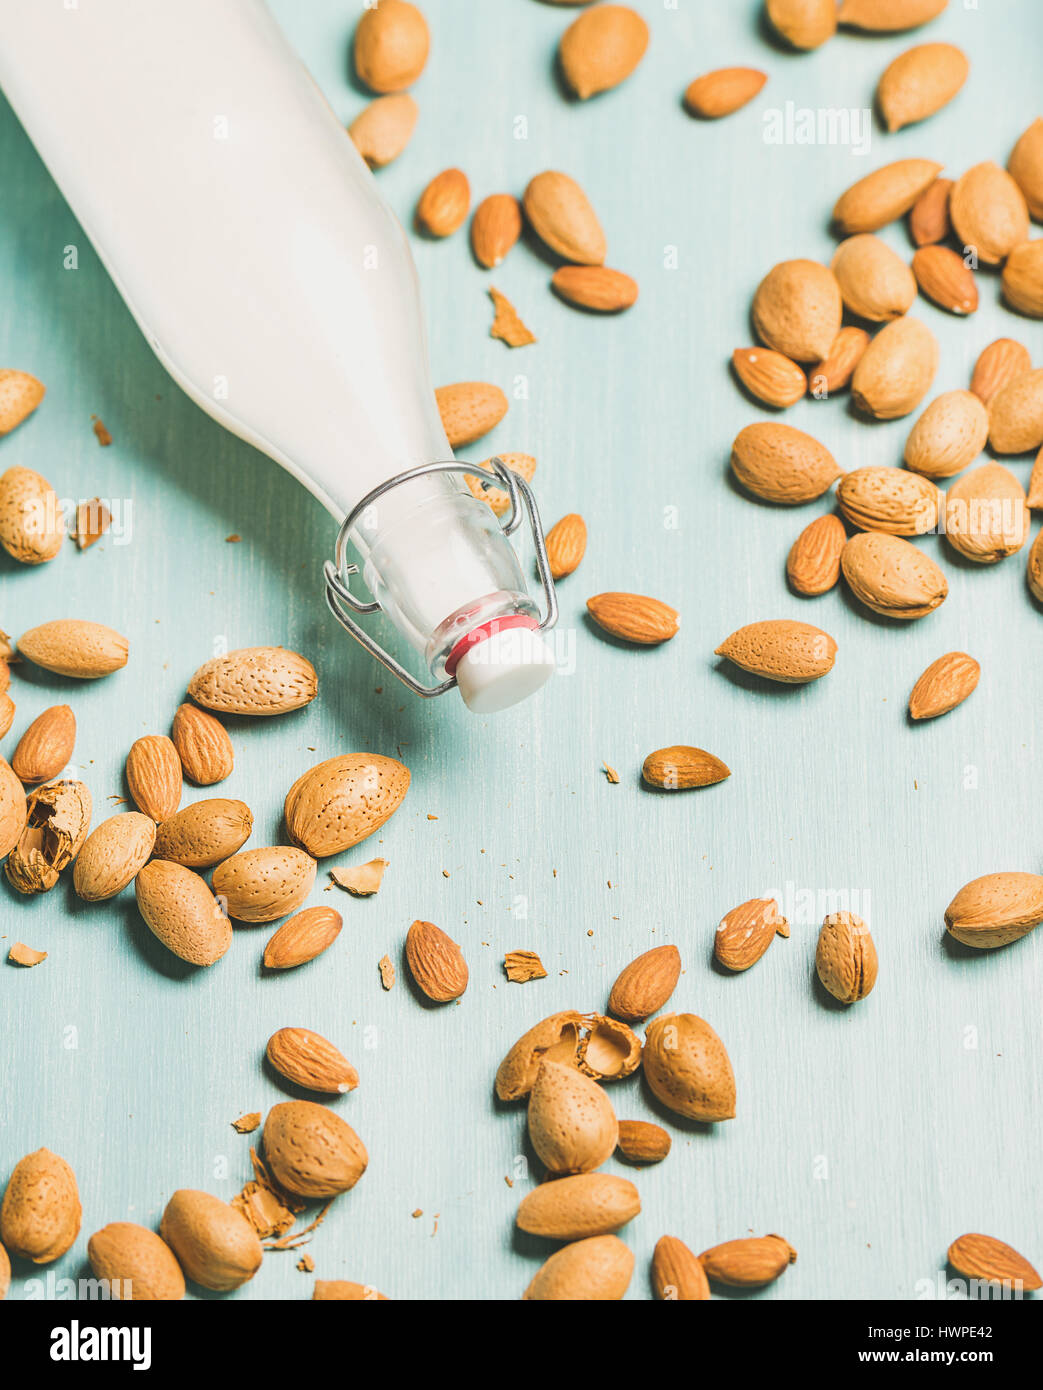 Dairy alternative almond milk in bottle, allergy-friendly food concept Stock Photo